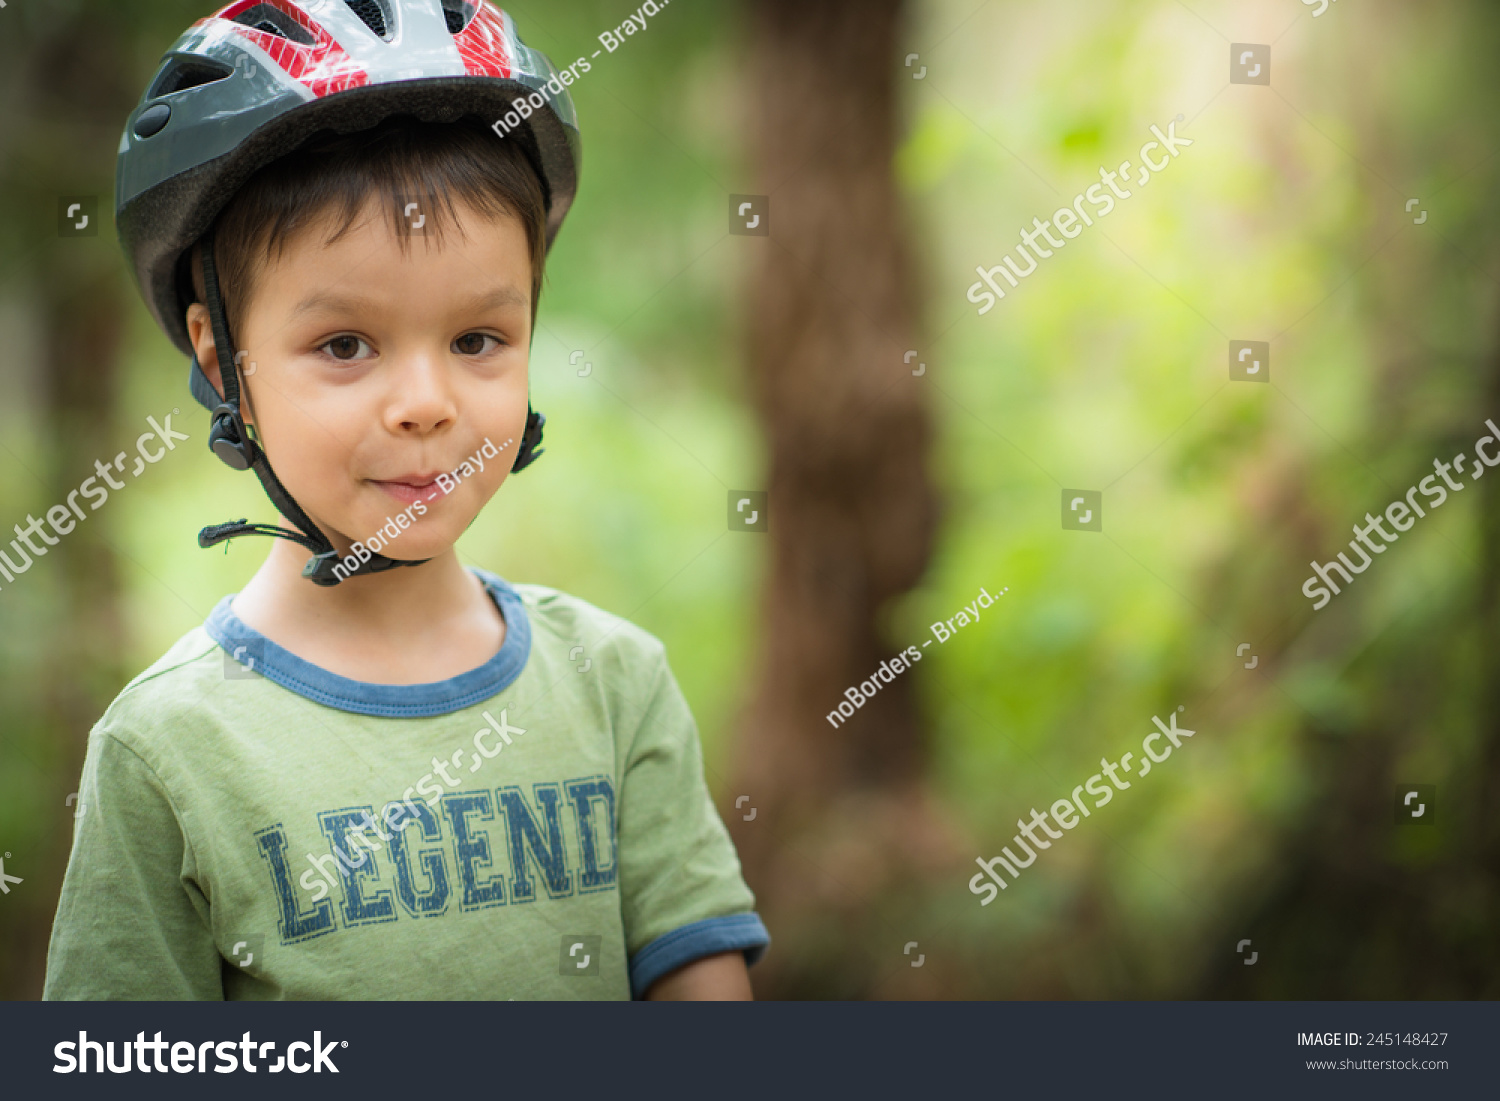 4 year old boy helmet